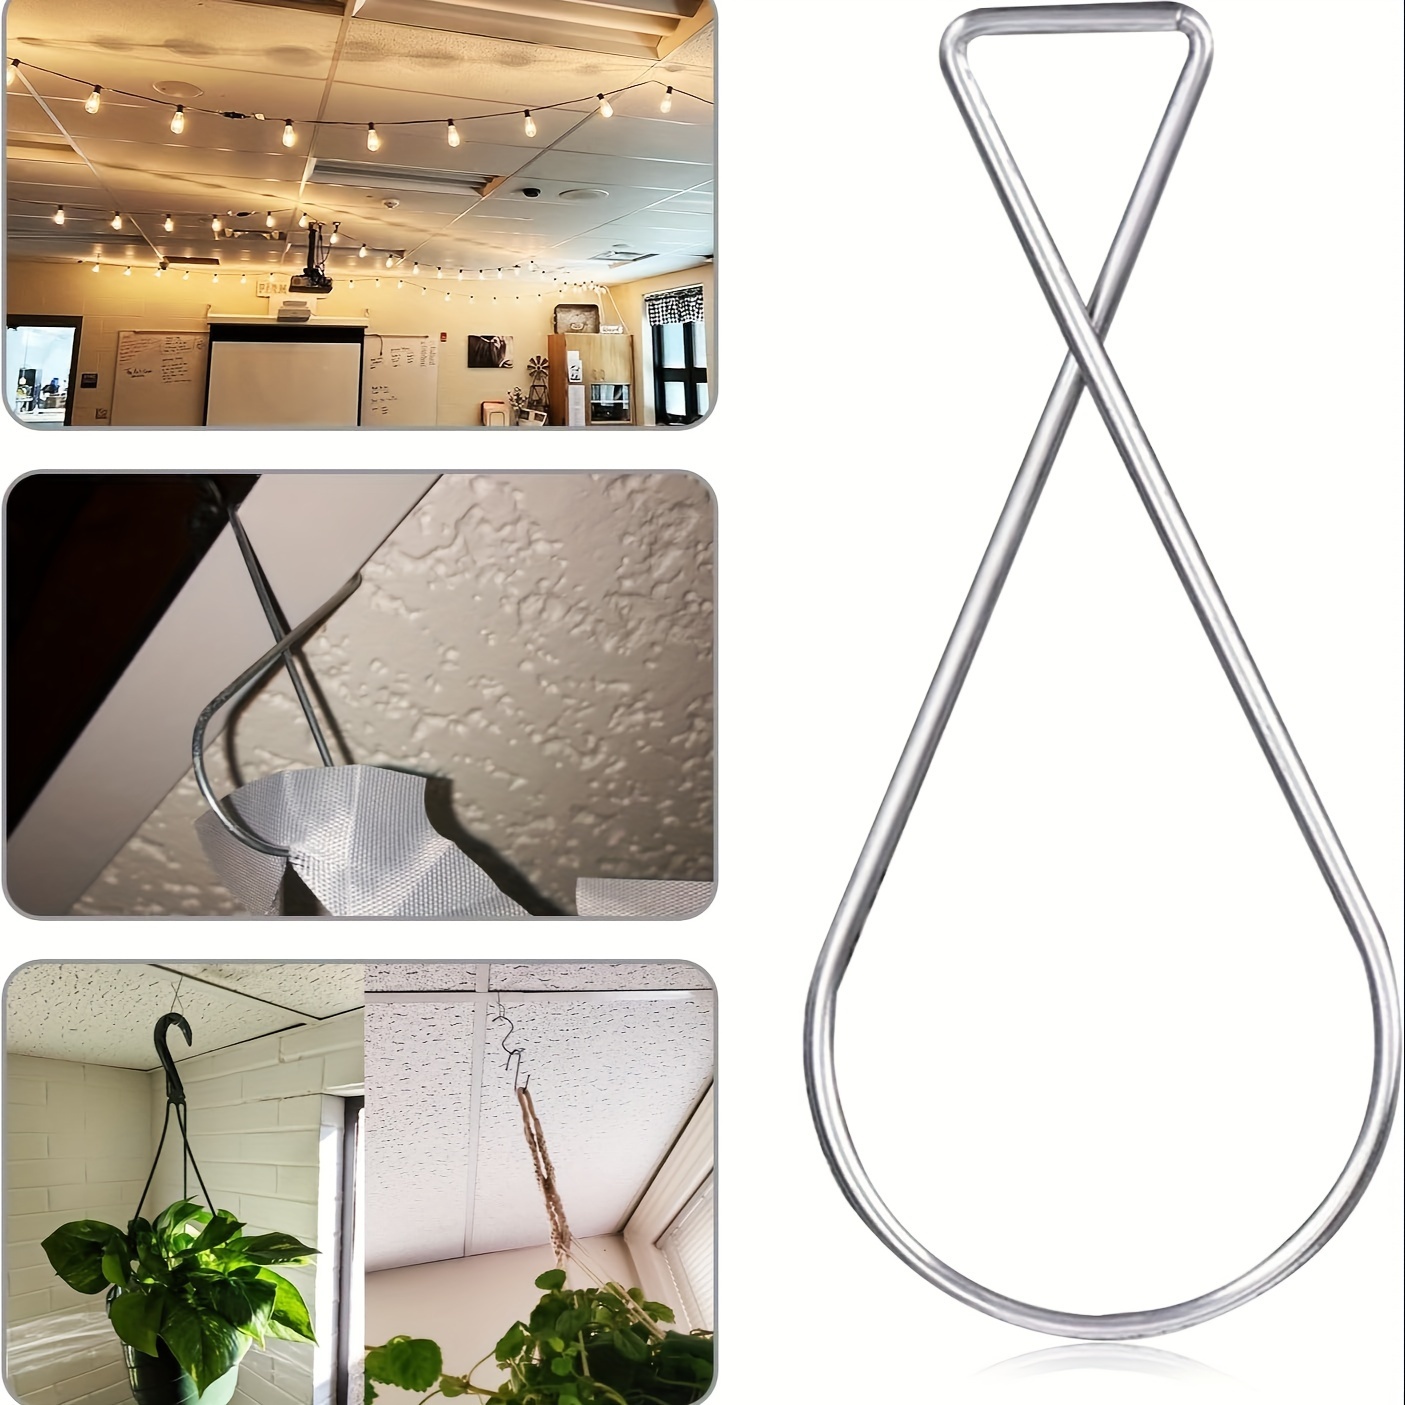 35 Pairs Drop Ceiling Hooks, Black Ceiling Tile Hooks Metal T-Bar Track  Clips Suspended Ceiling Tile Hanging Hooks Ceiling Clips for Hanging Plants